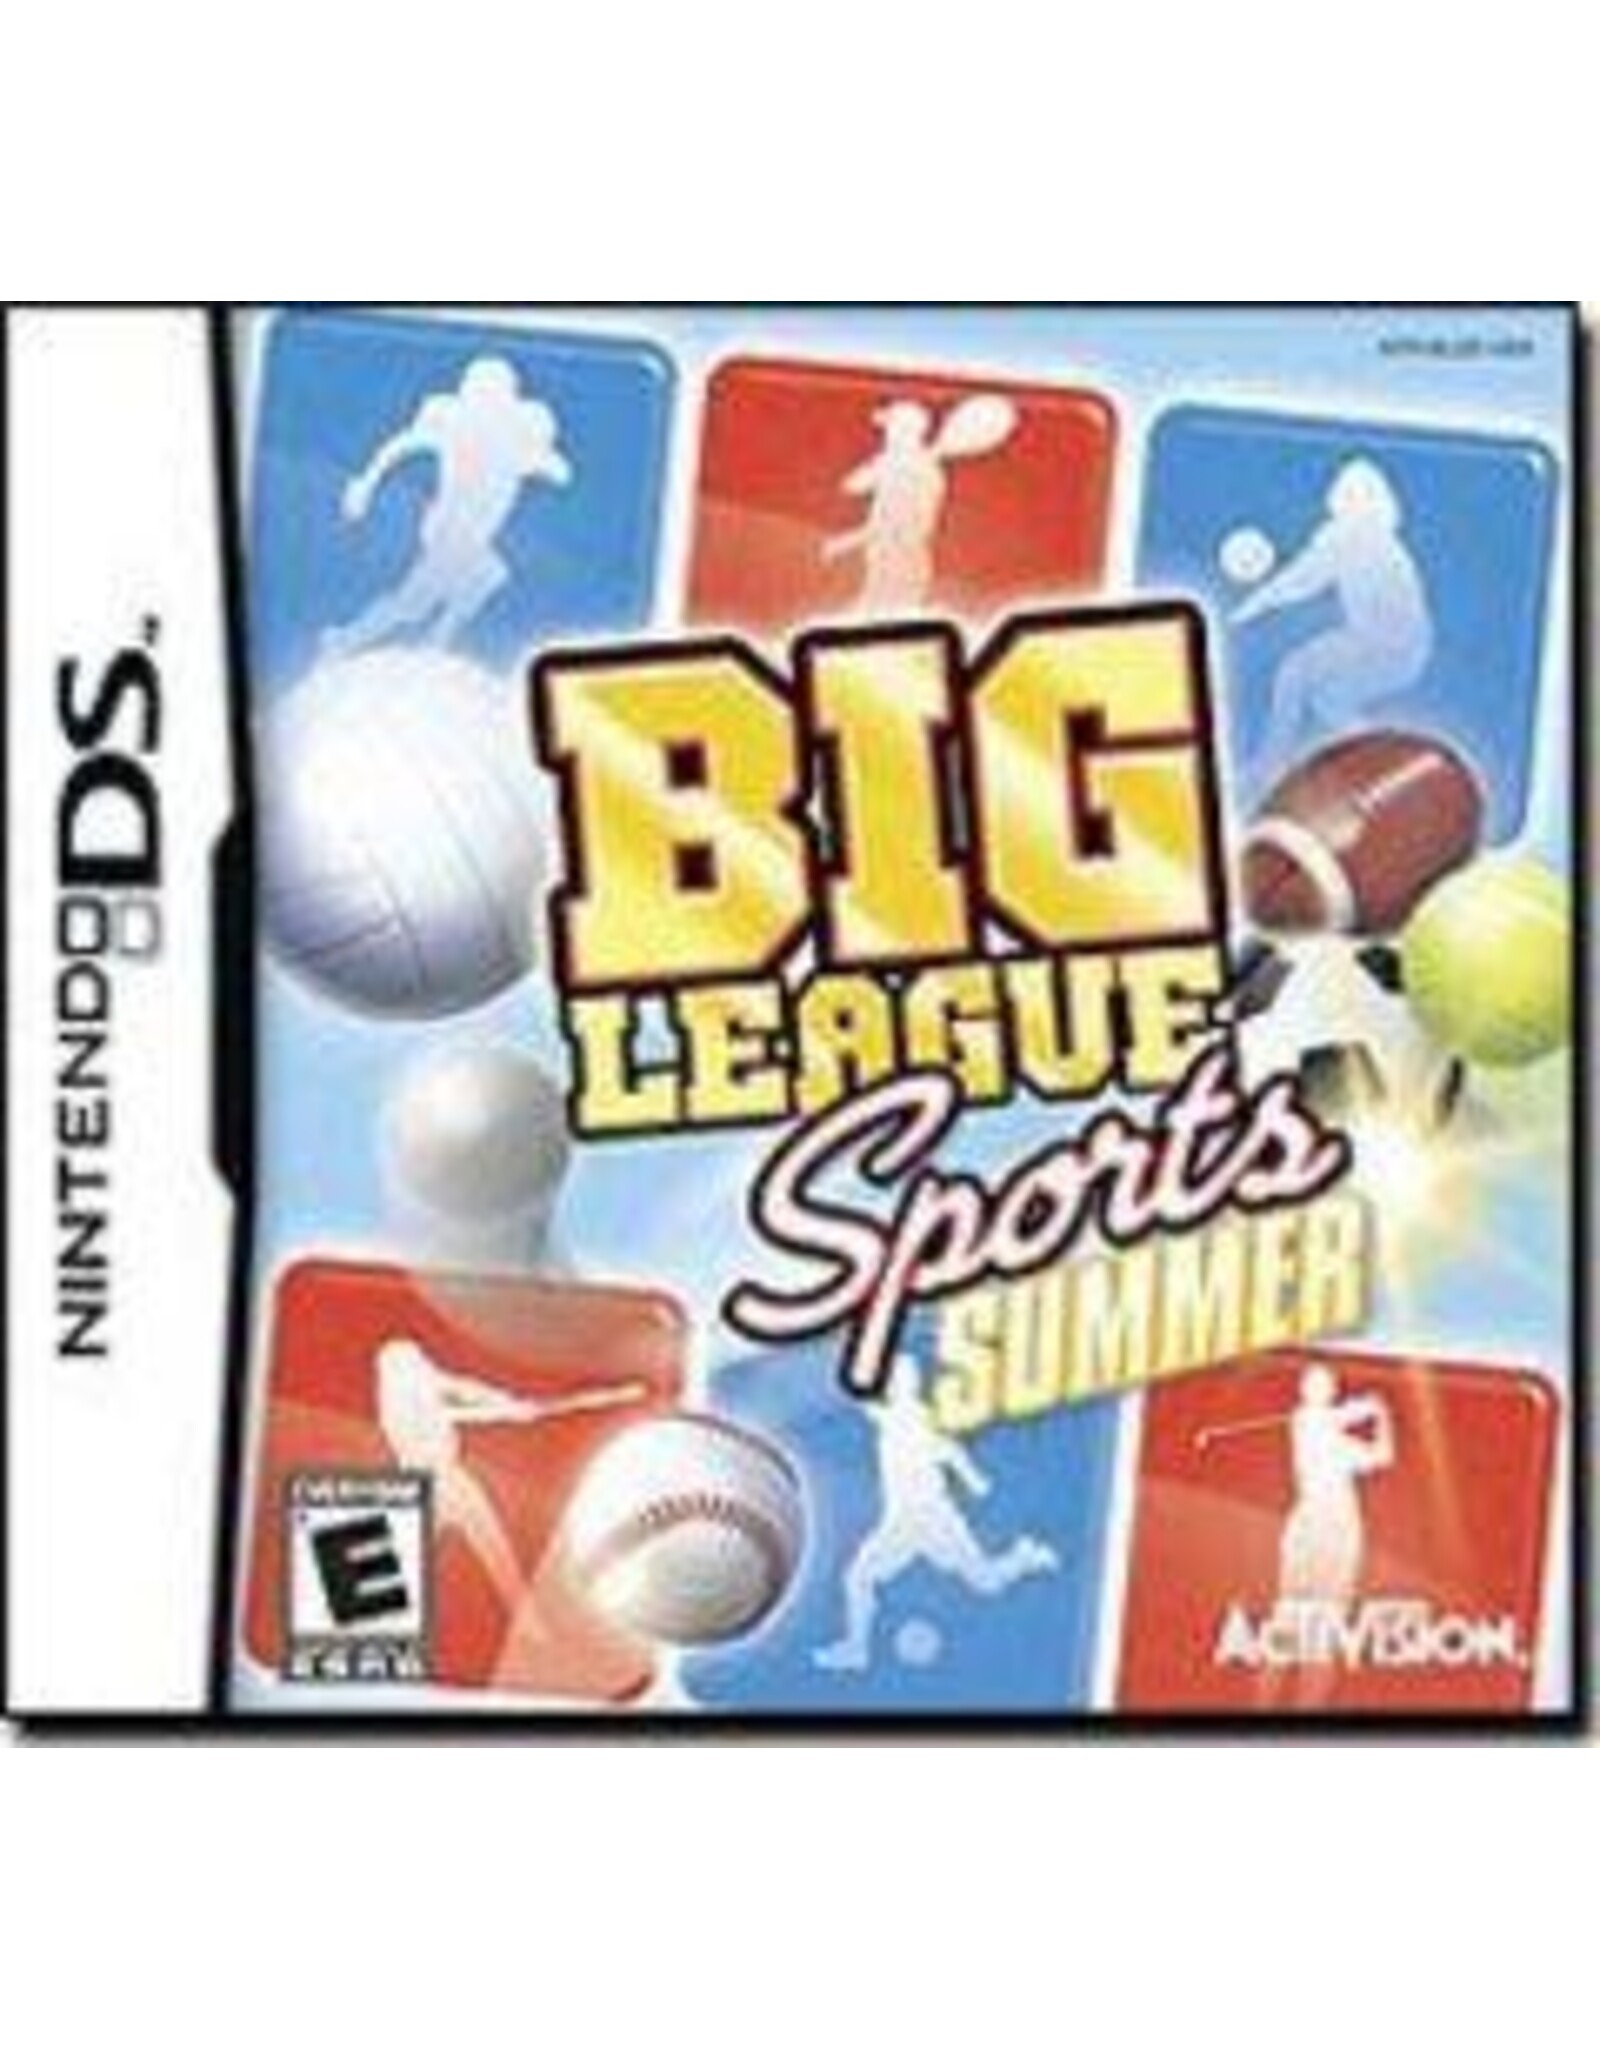 Nintendo DS Big League Sports: Summer (CiB, Lightly Damaged Sleeve)